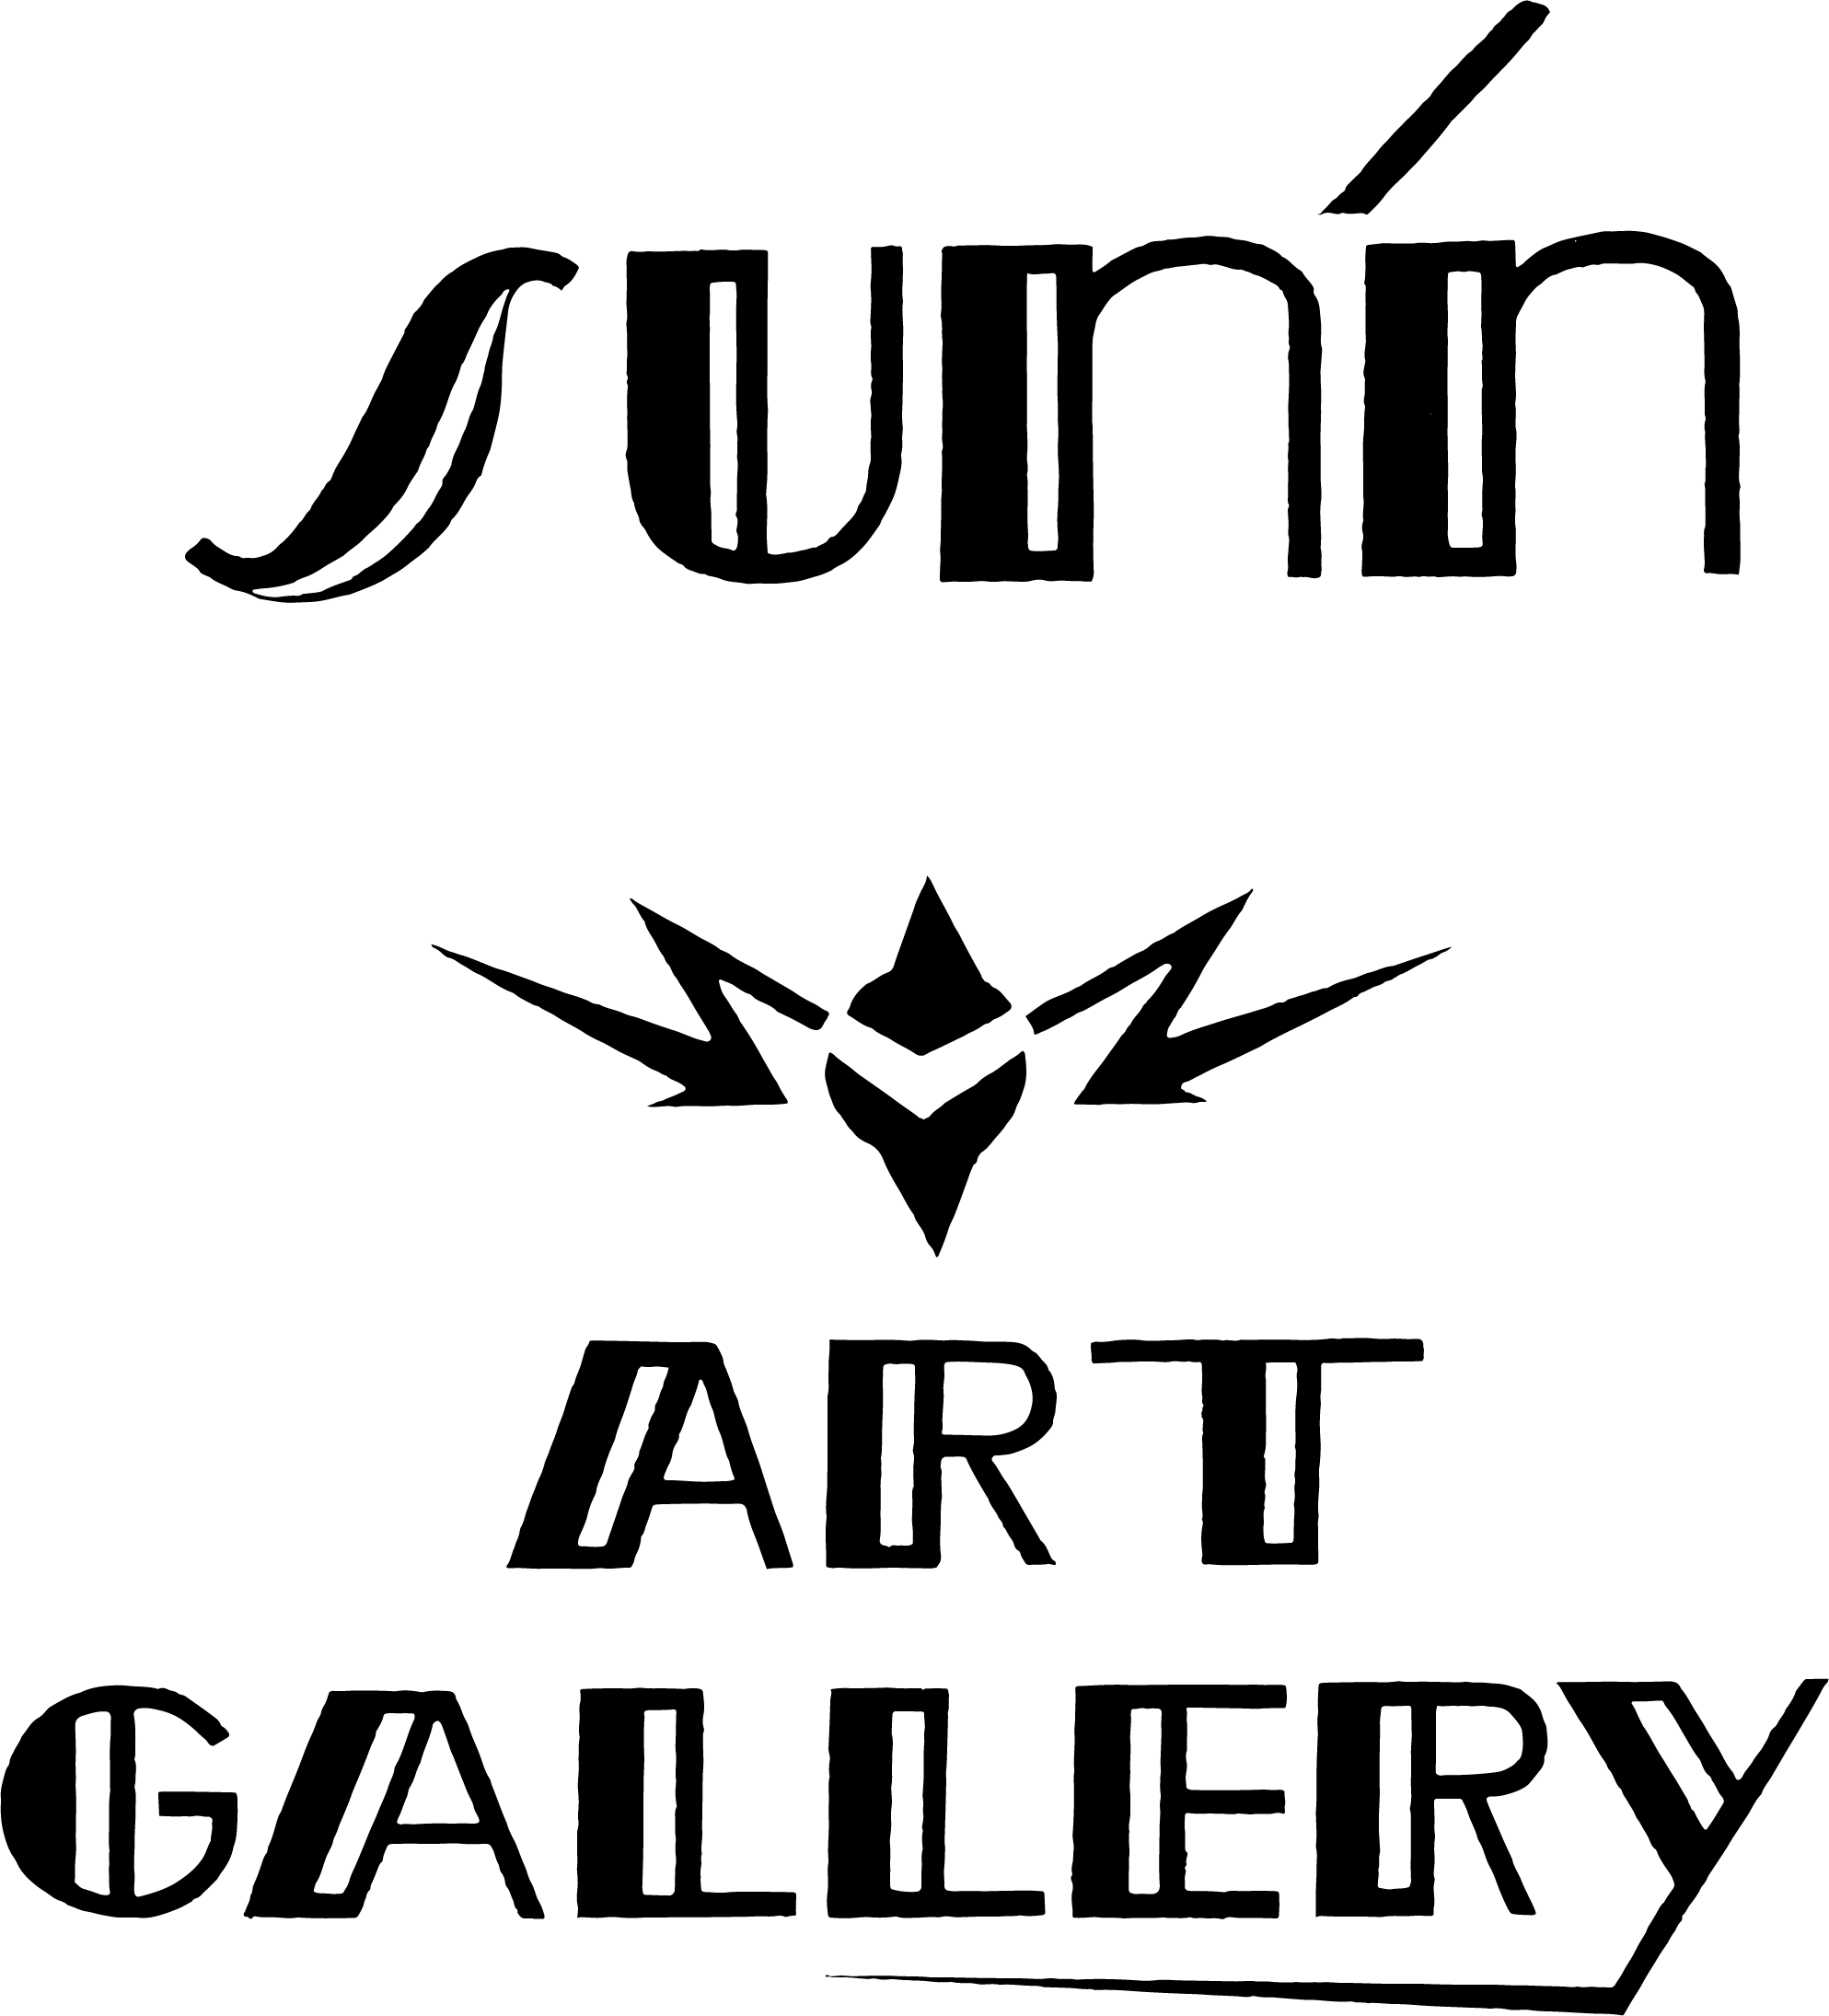 Sunn Art Gallery